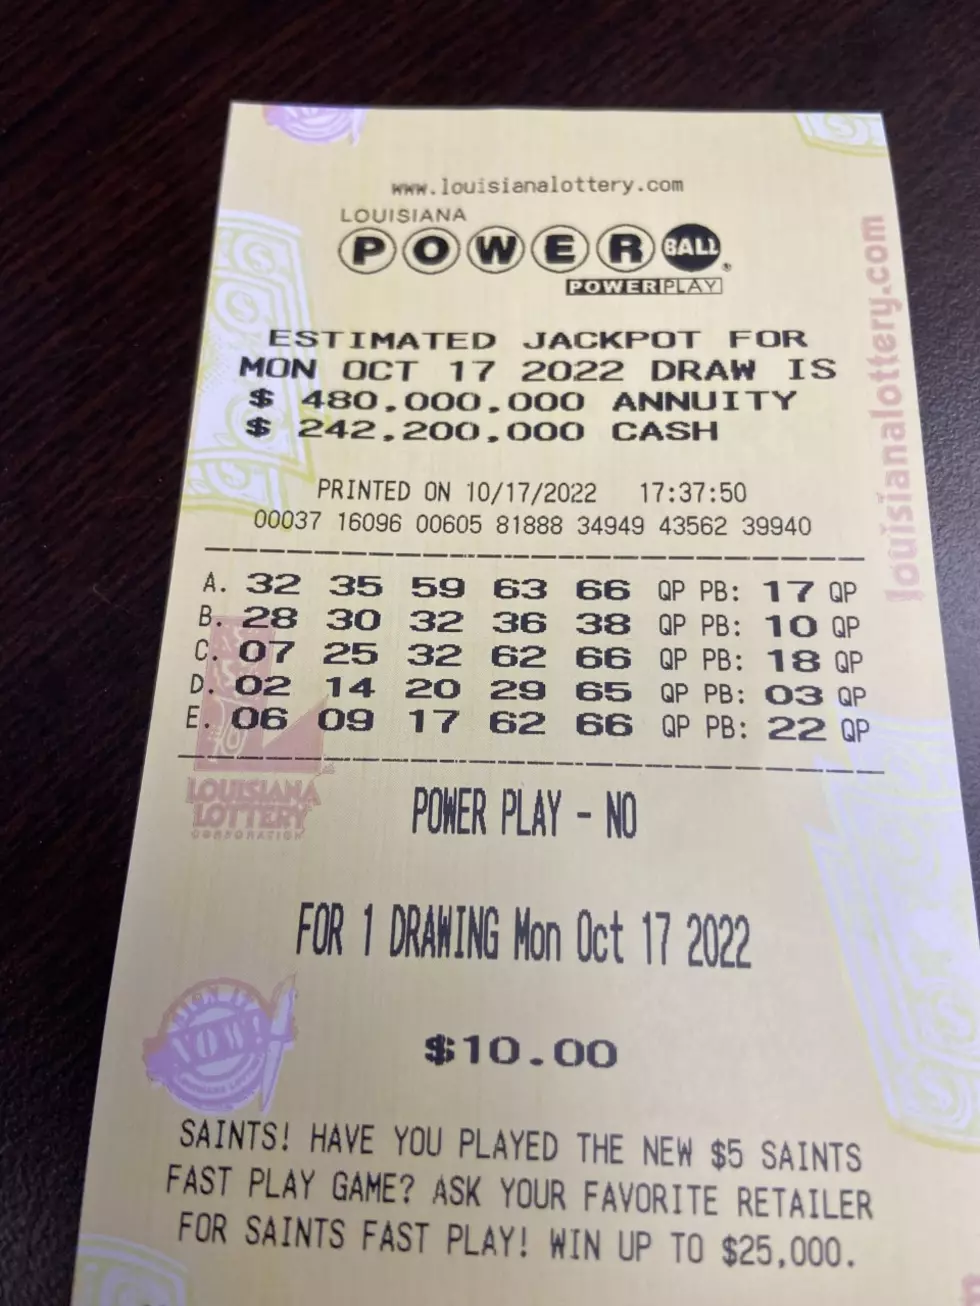 Did Anyone from Louisiana Win the Big Powerball Jackpot?